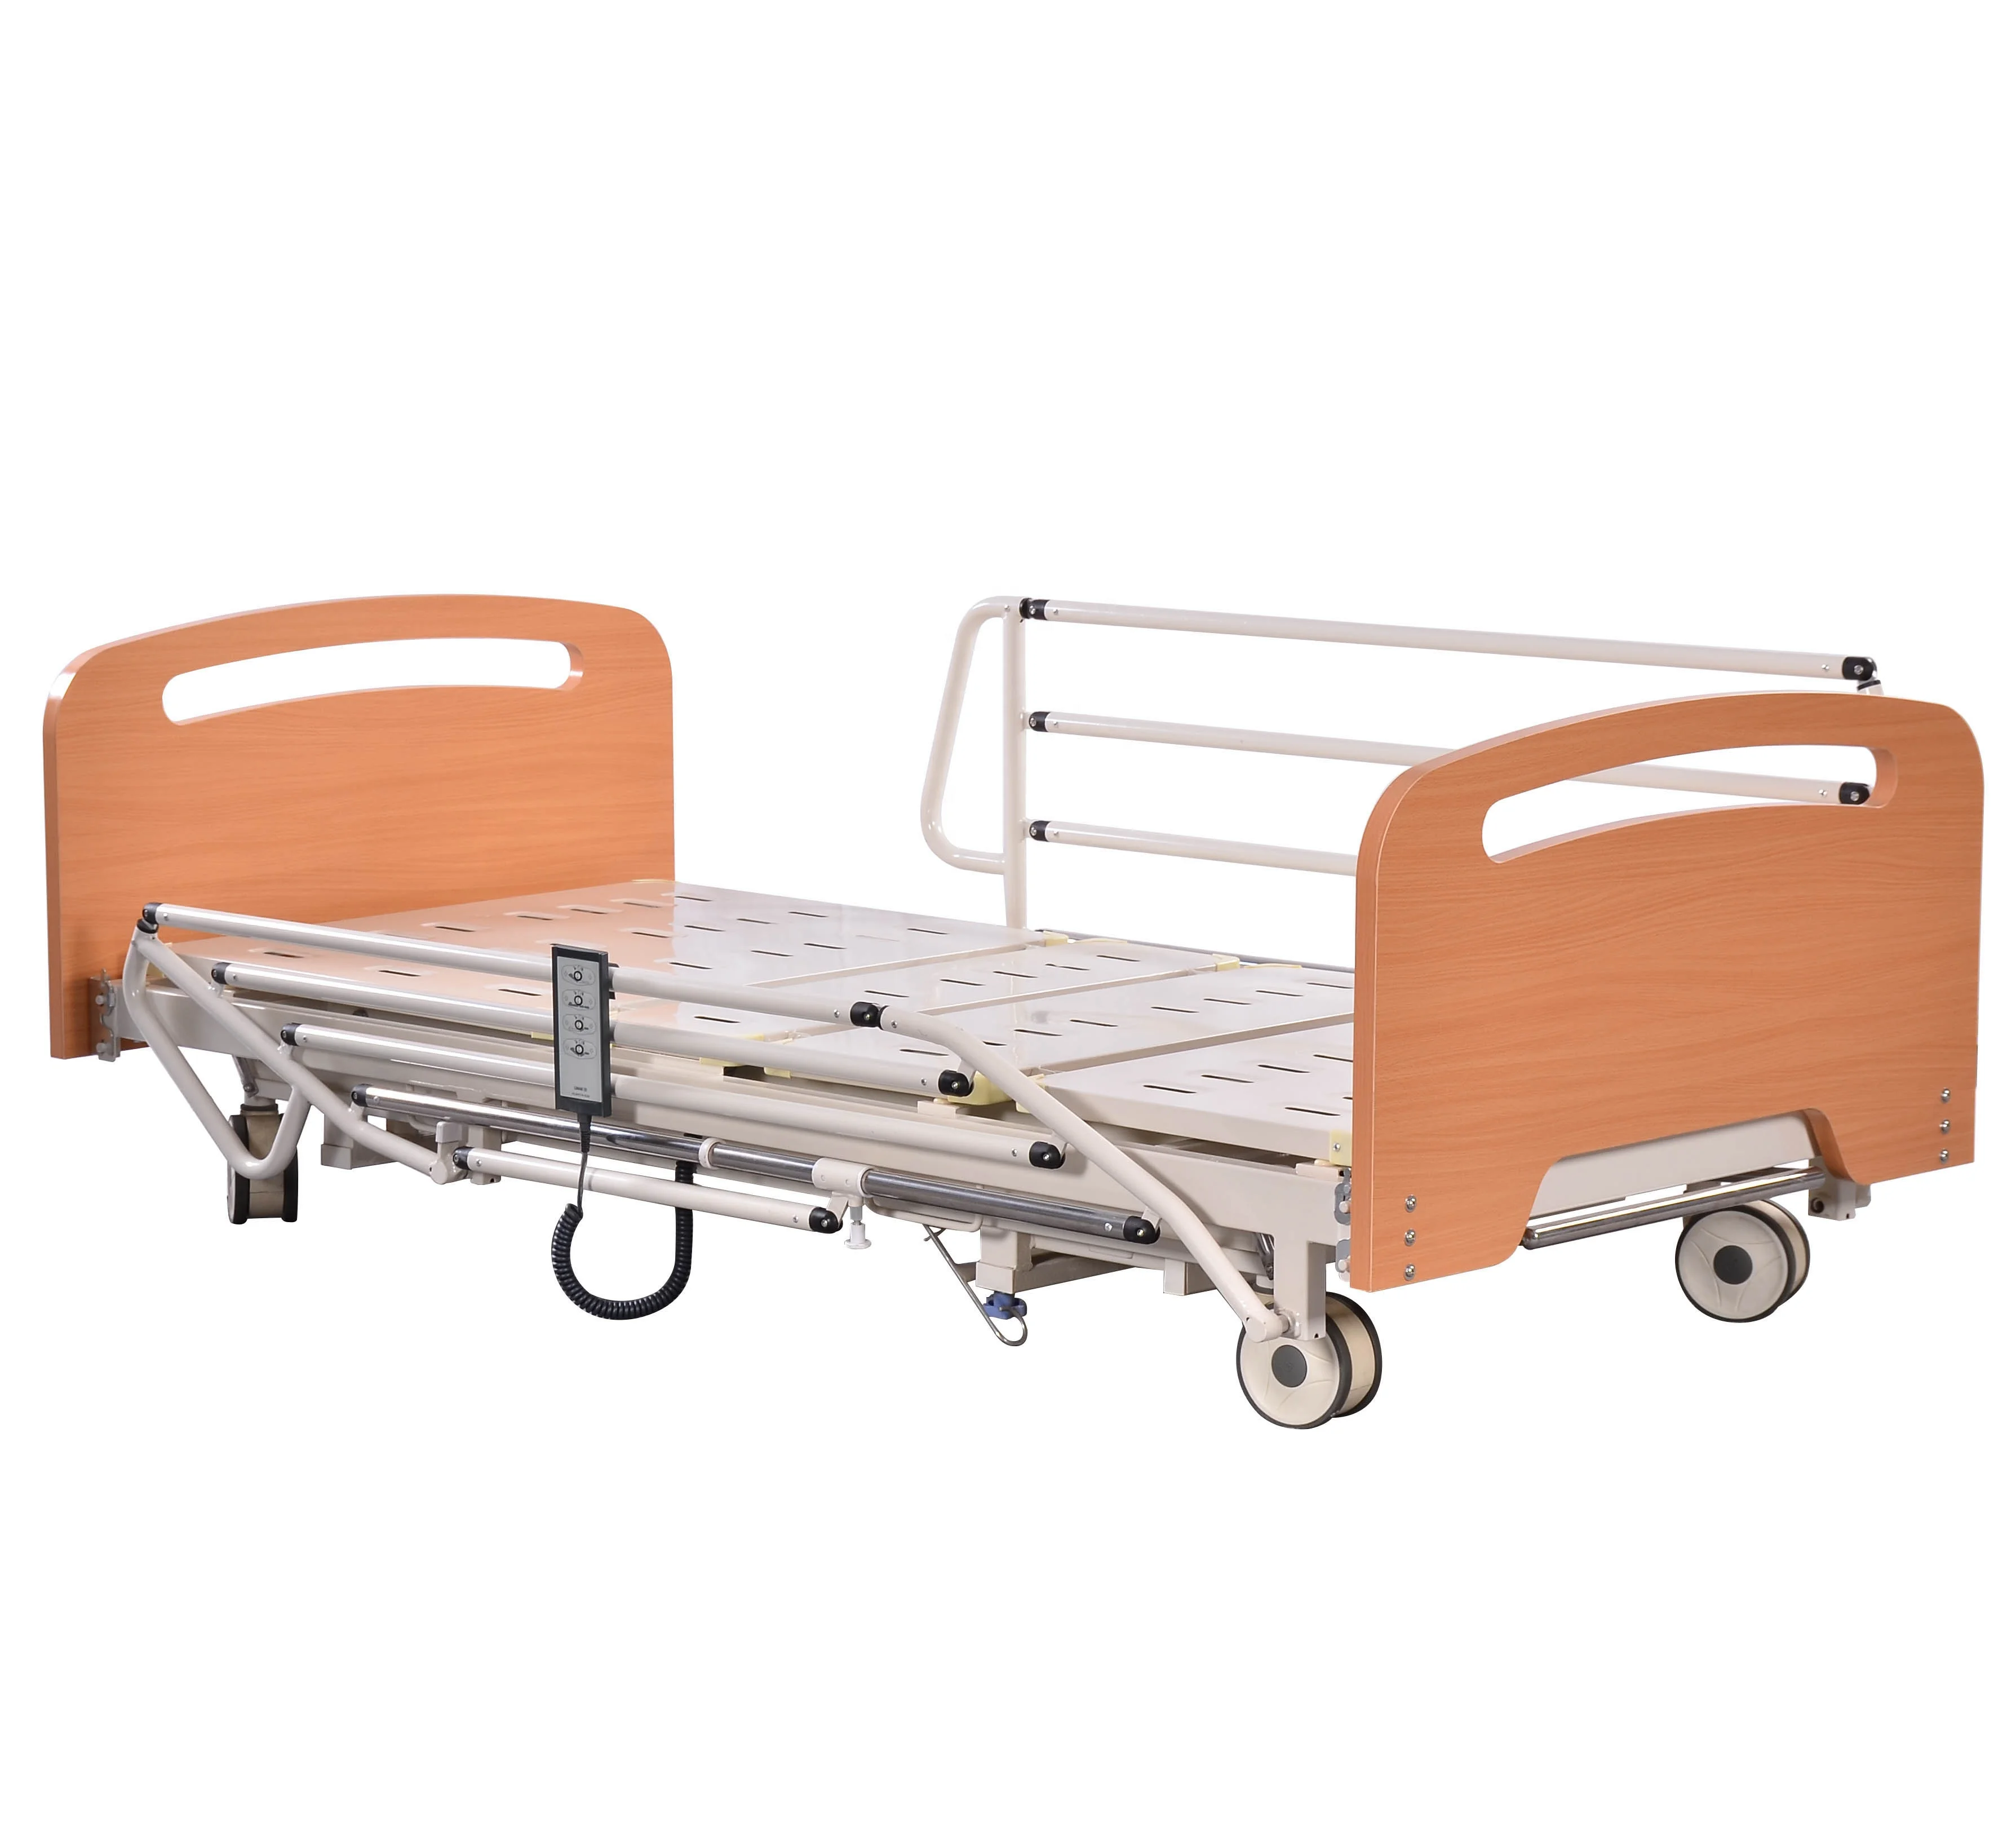 electric hospital bed for sale - Anyang Top Medical: Hospital Bed Supplier